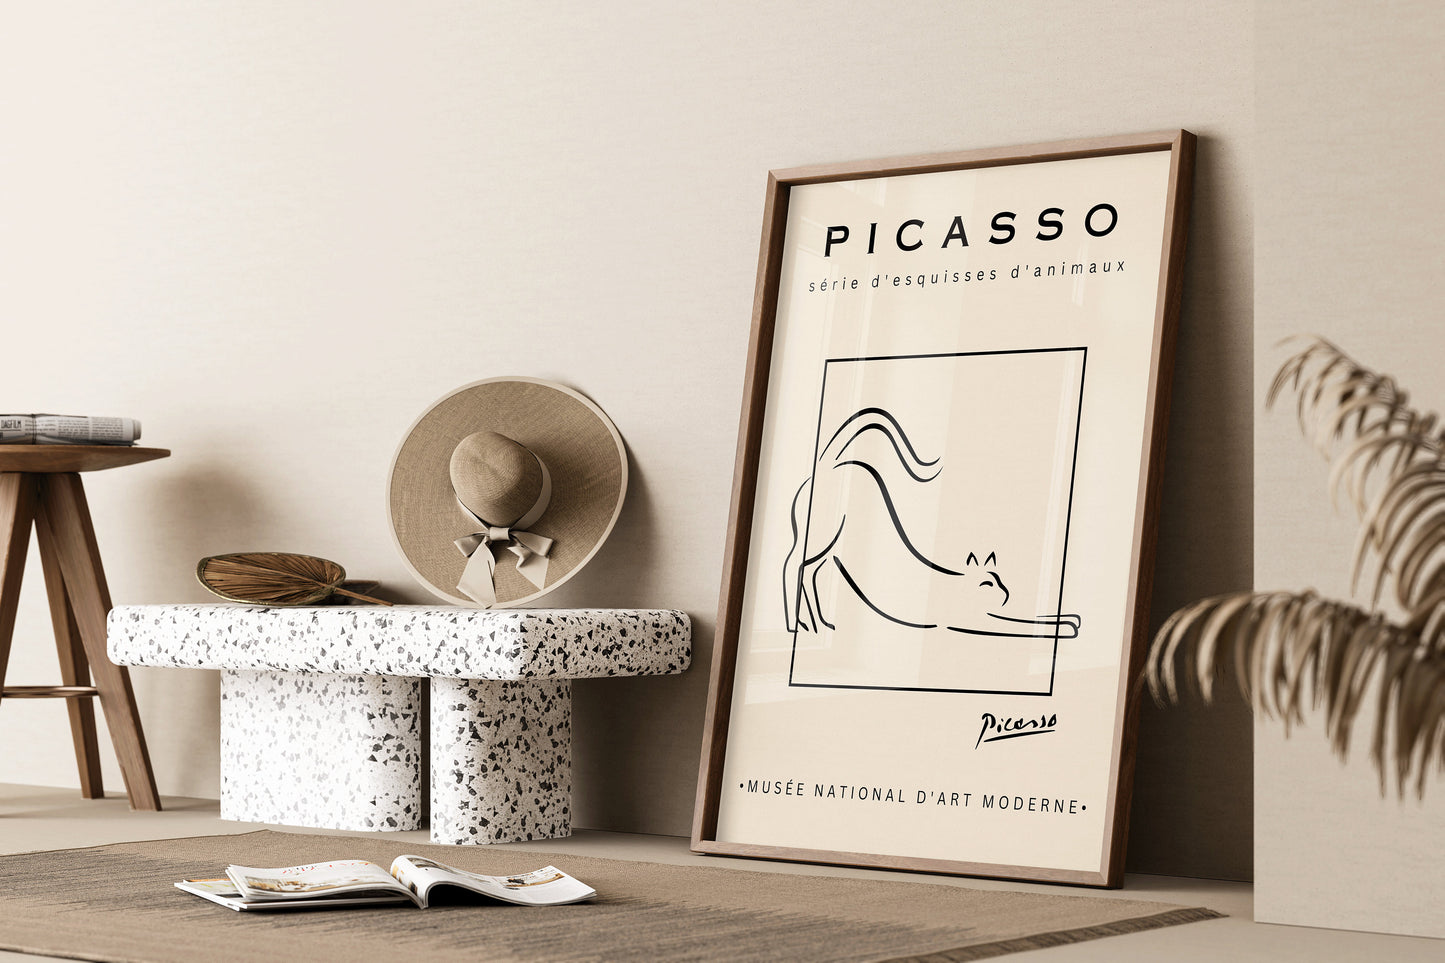 Pablo Picasso - Cat Sketch